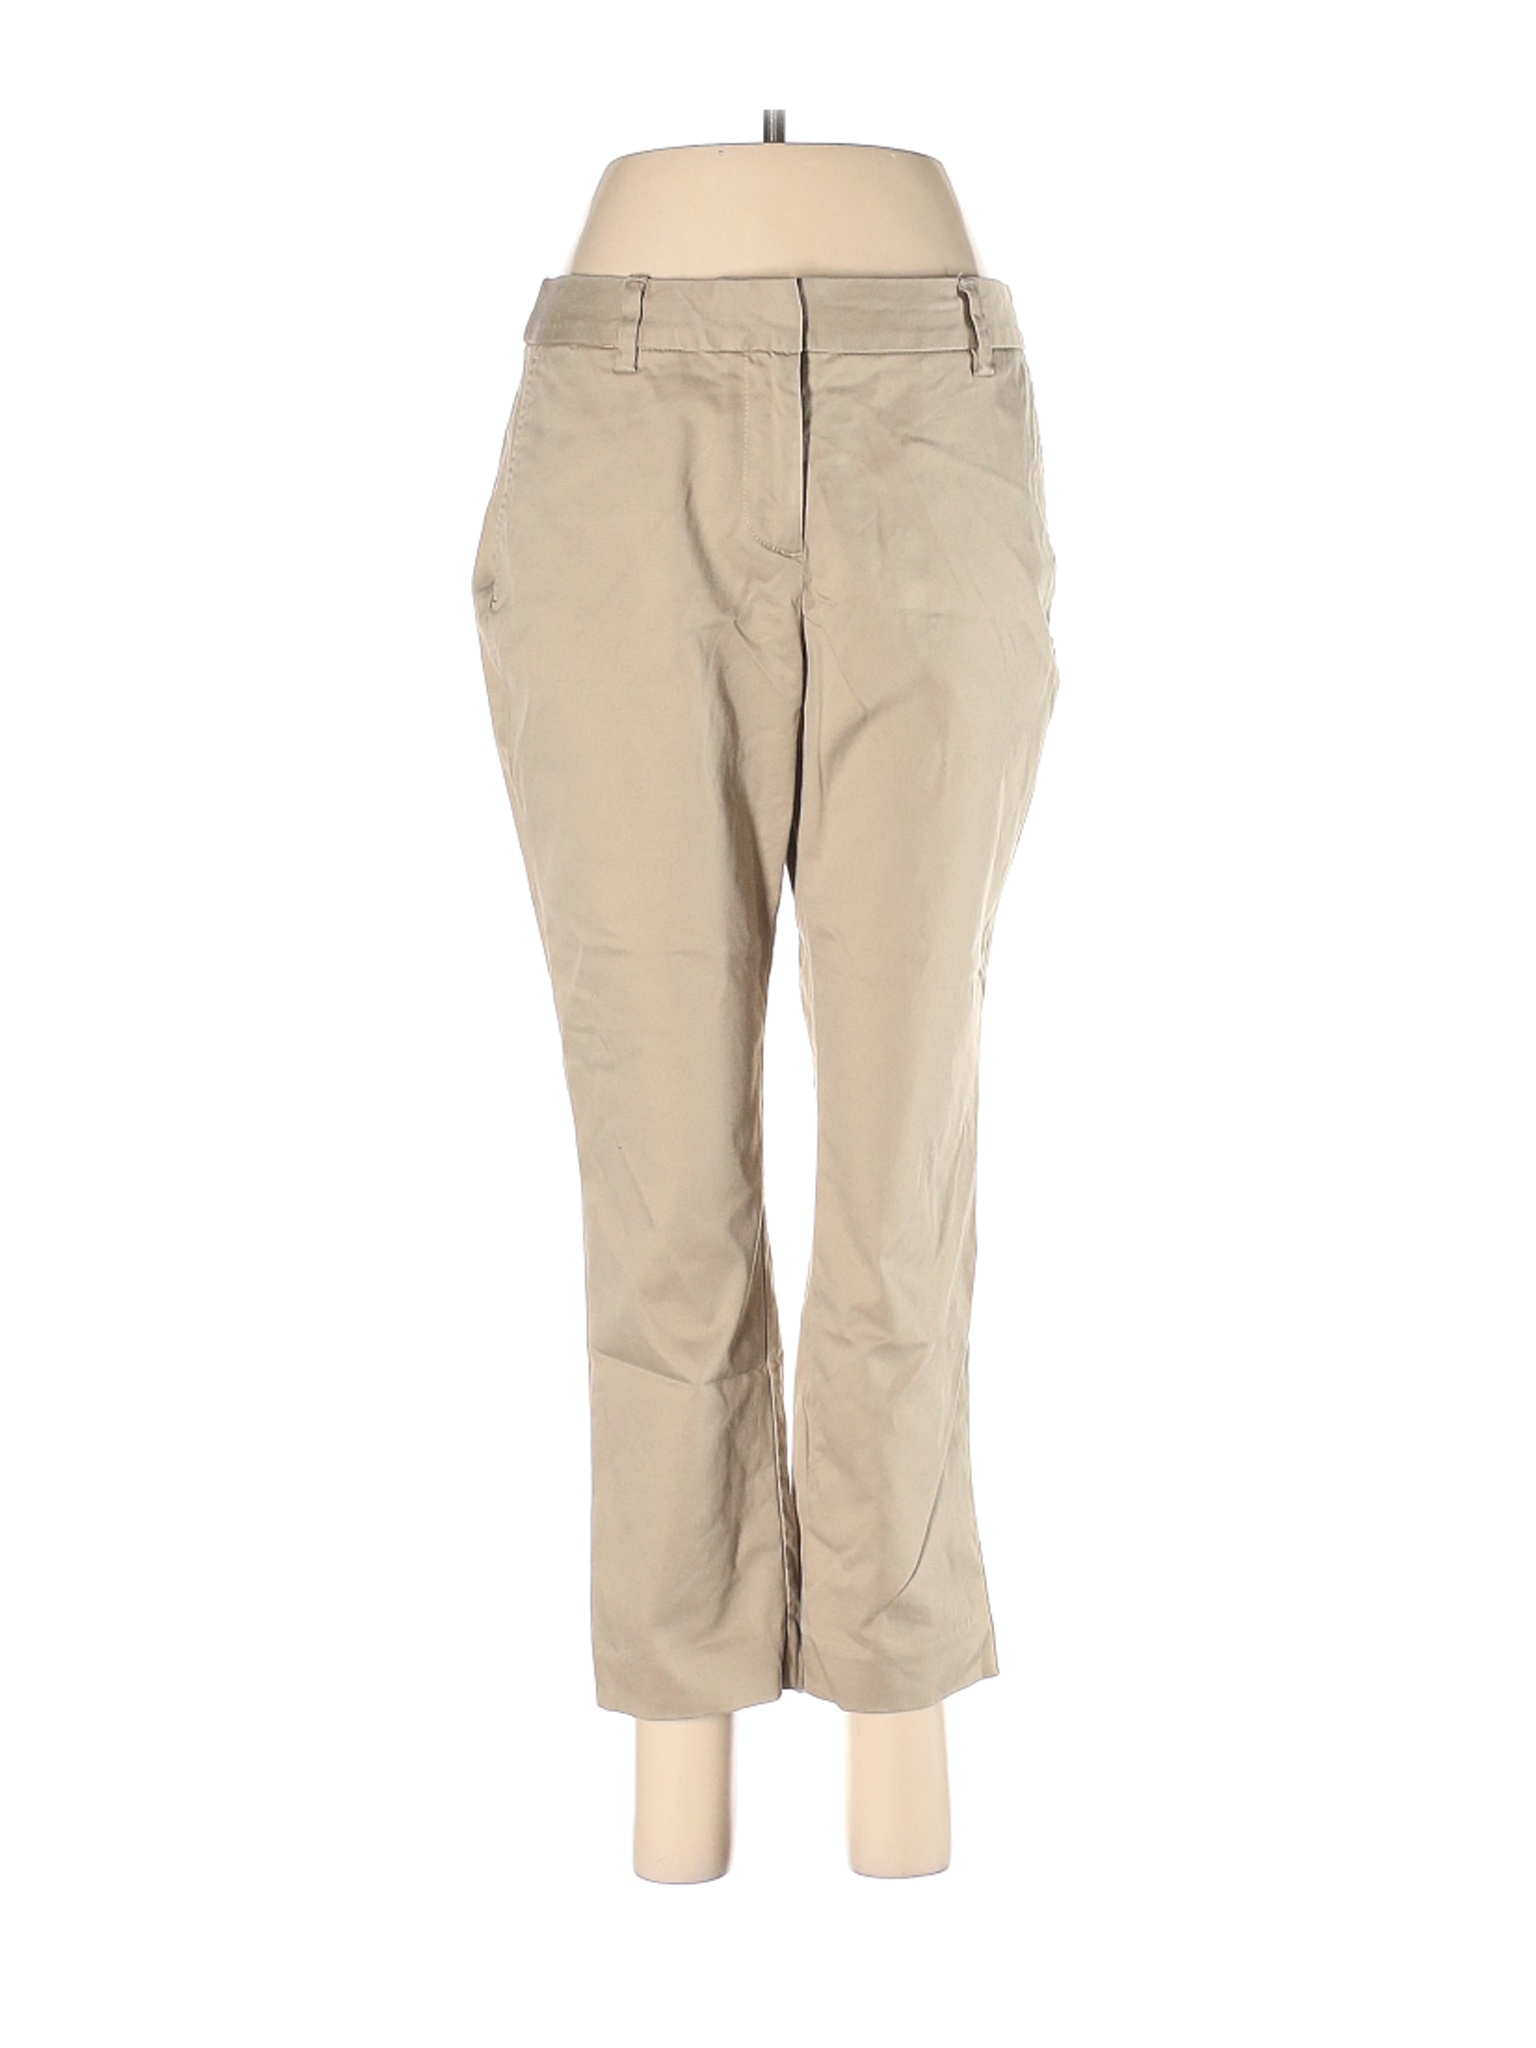 Lands' End Women Brown Casual Pants 4 Petites | eBay